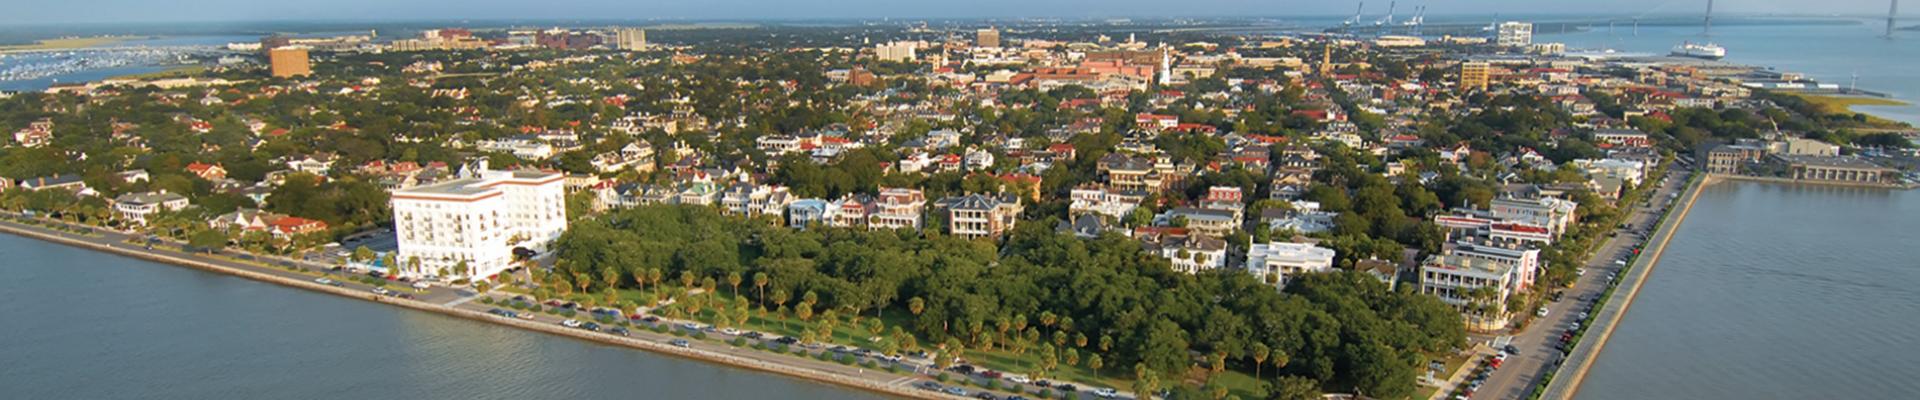 Savannah peninsula aerial view